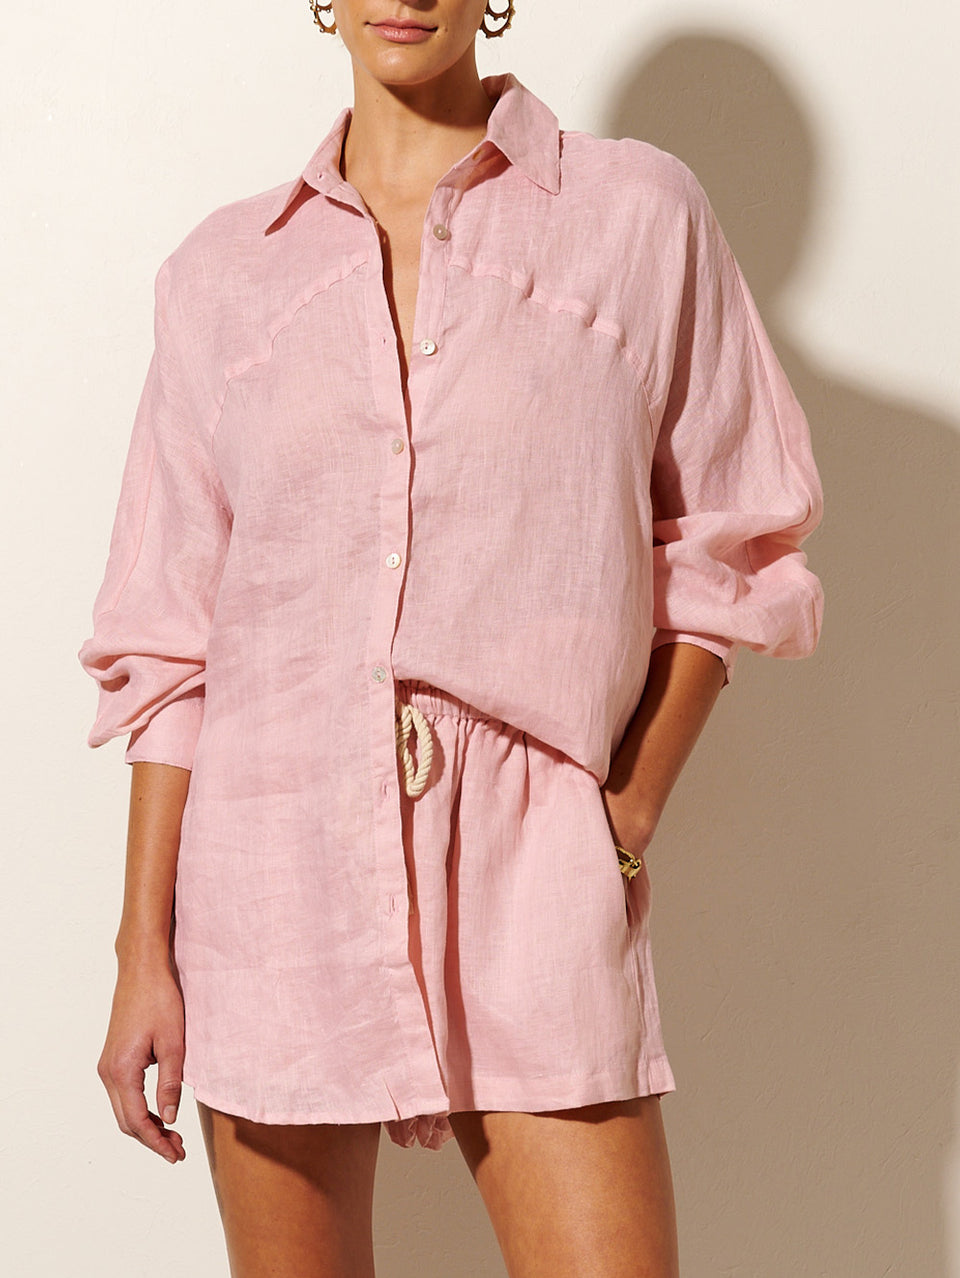 KIVARI Nikita Shirt | Model wears Pink Linen Shirt